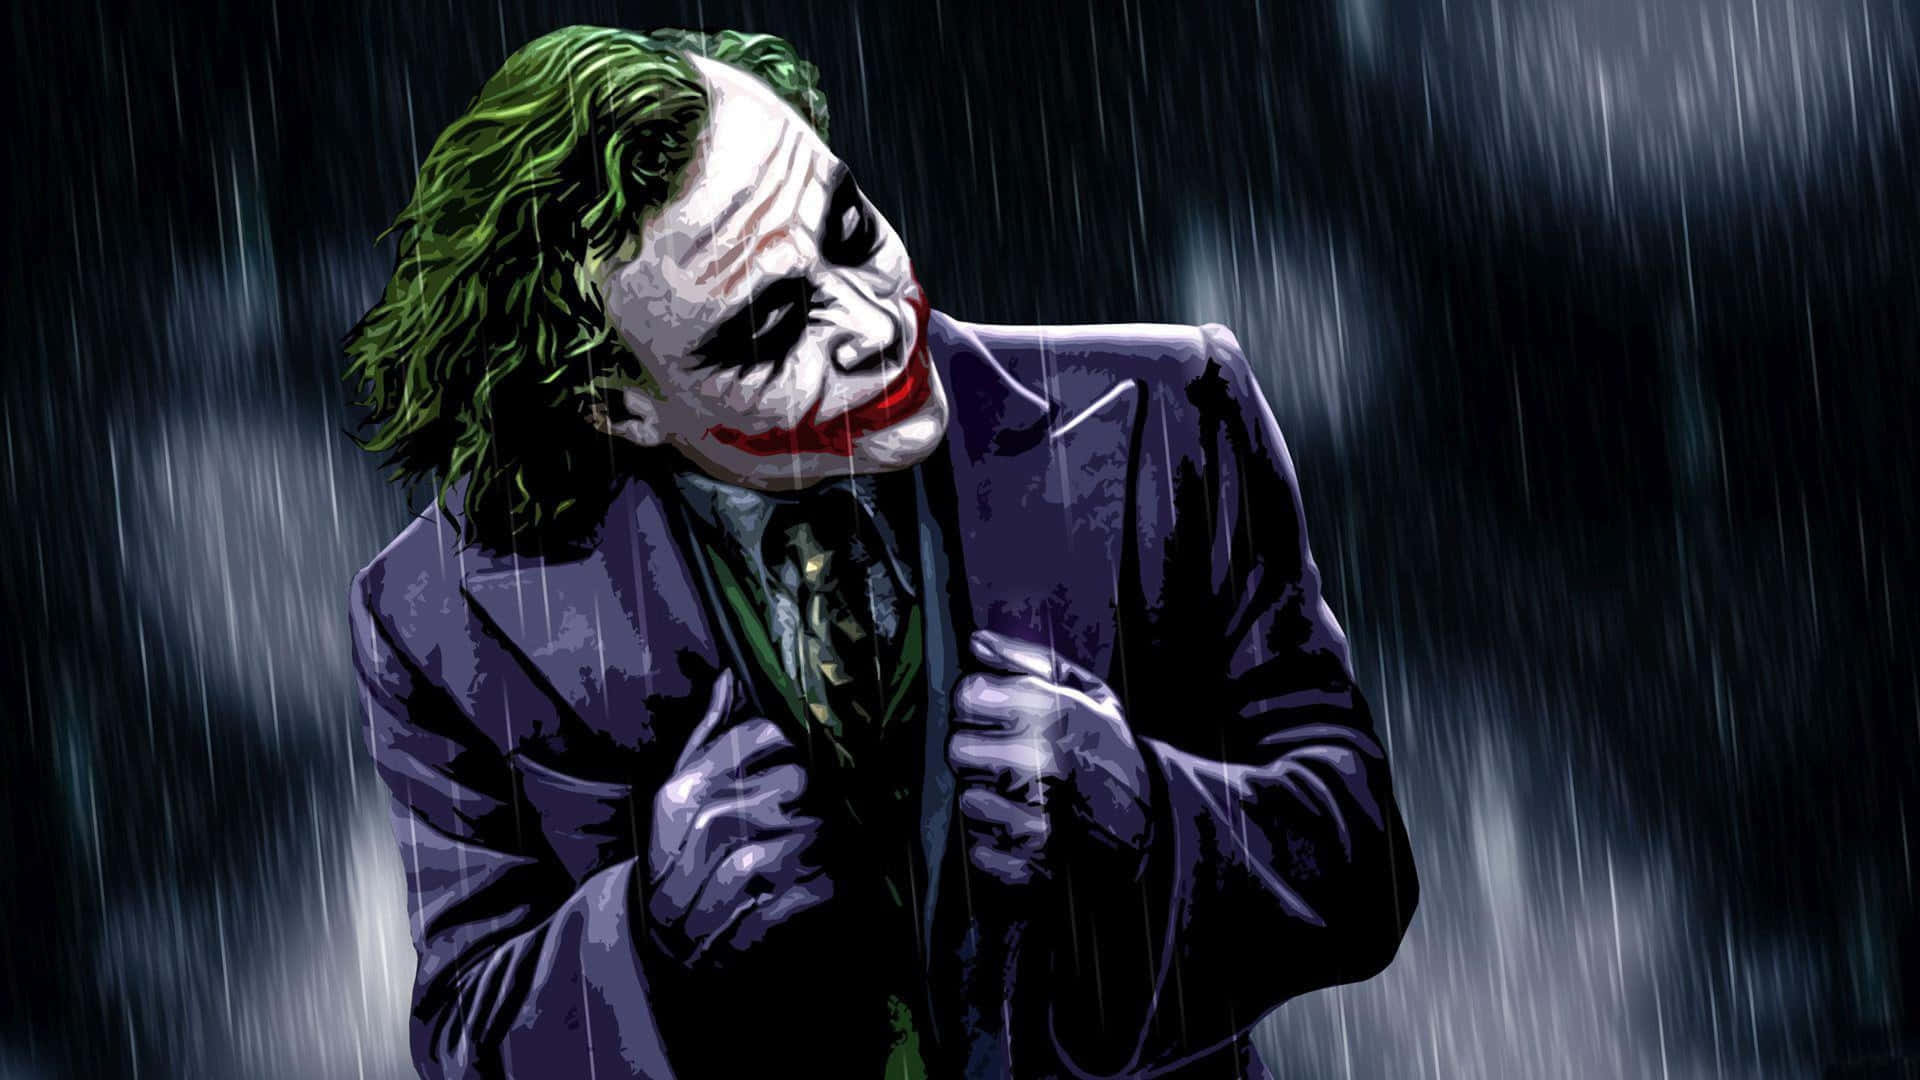 Joker dark dc comics villain artwork 720x1280 wallpaper  Joker Resim  duvarı Fantazi sanatı